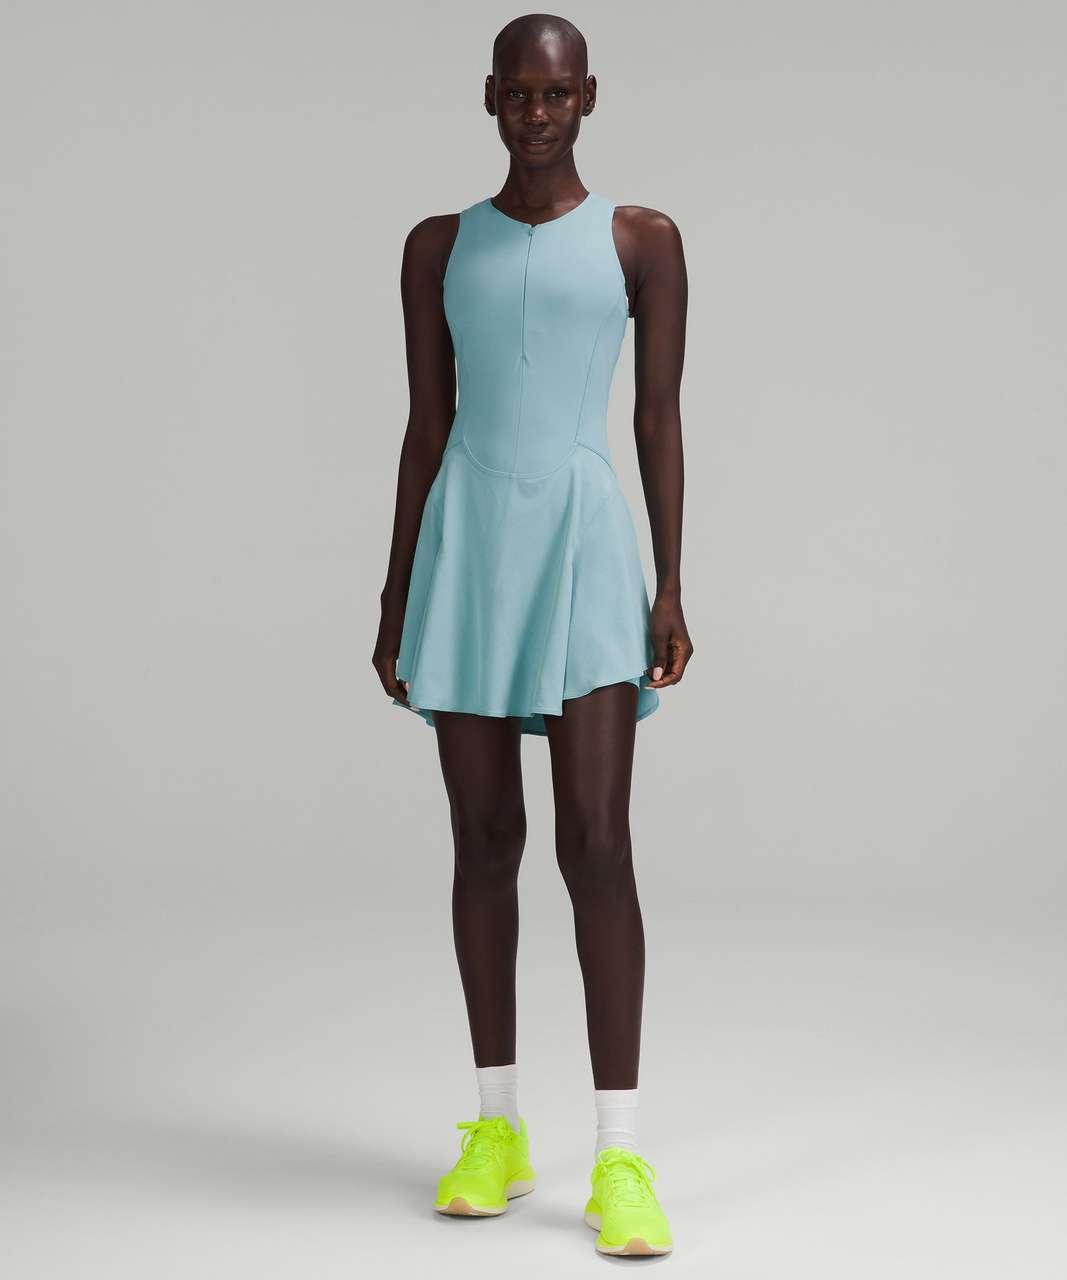 Lululemon Everlux Short-Lined Tennis Tank Dress 6" - Tidal Teal